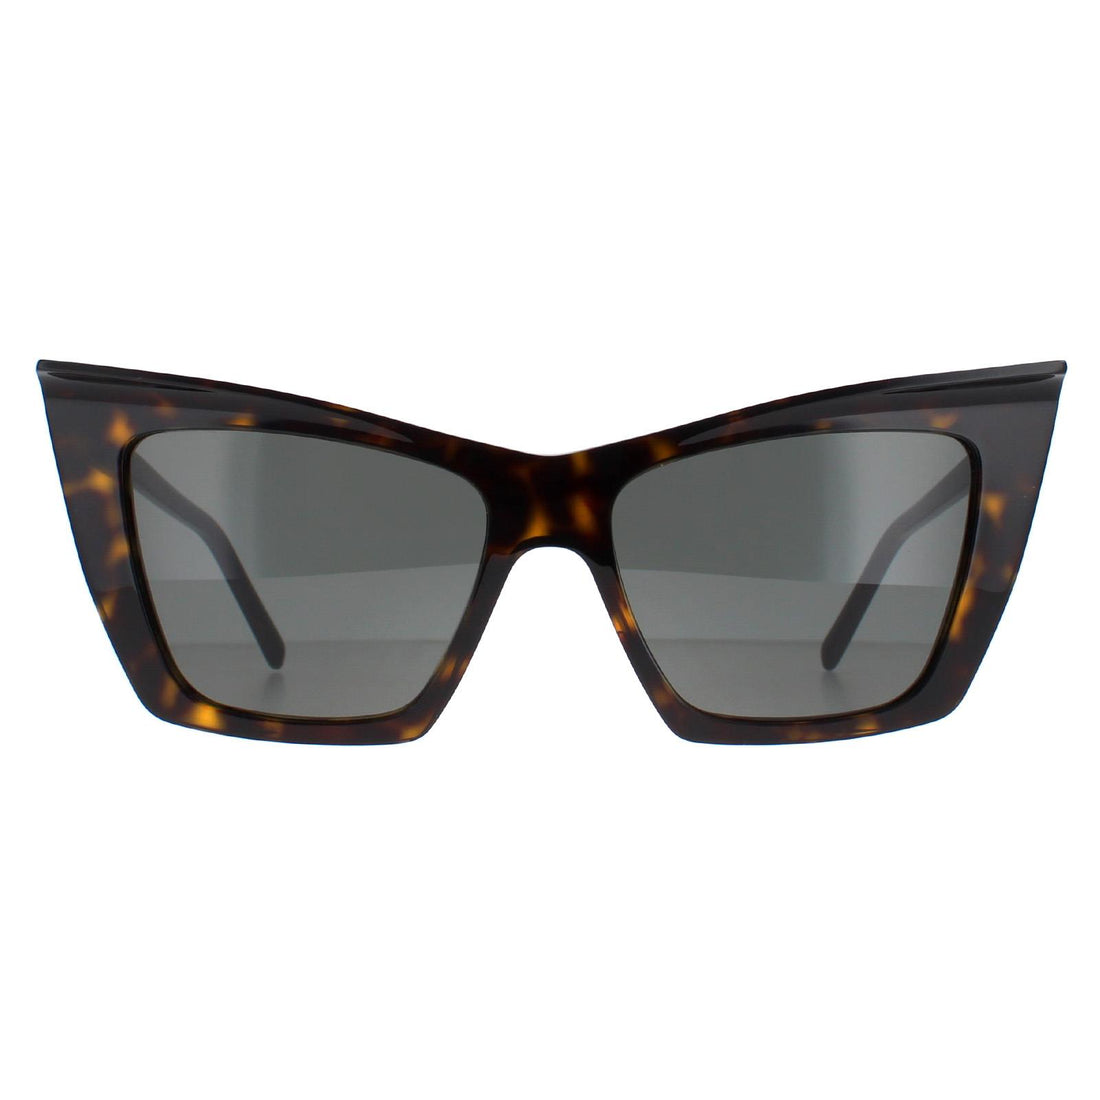 Saint Laurent SL 372 Sunglasses Shiny Dark Havana / Solid Grey